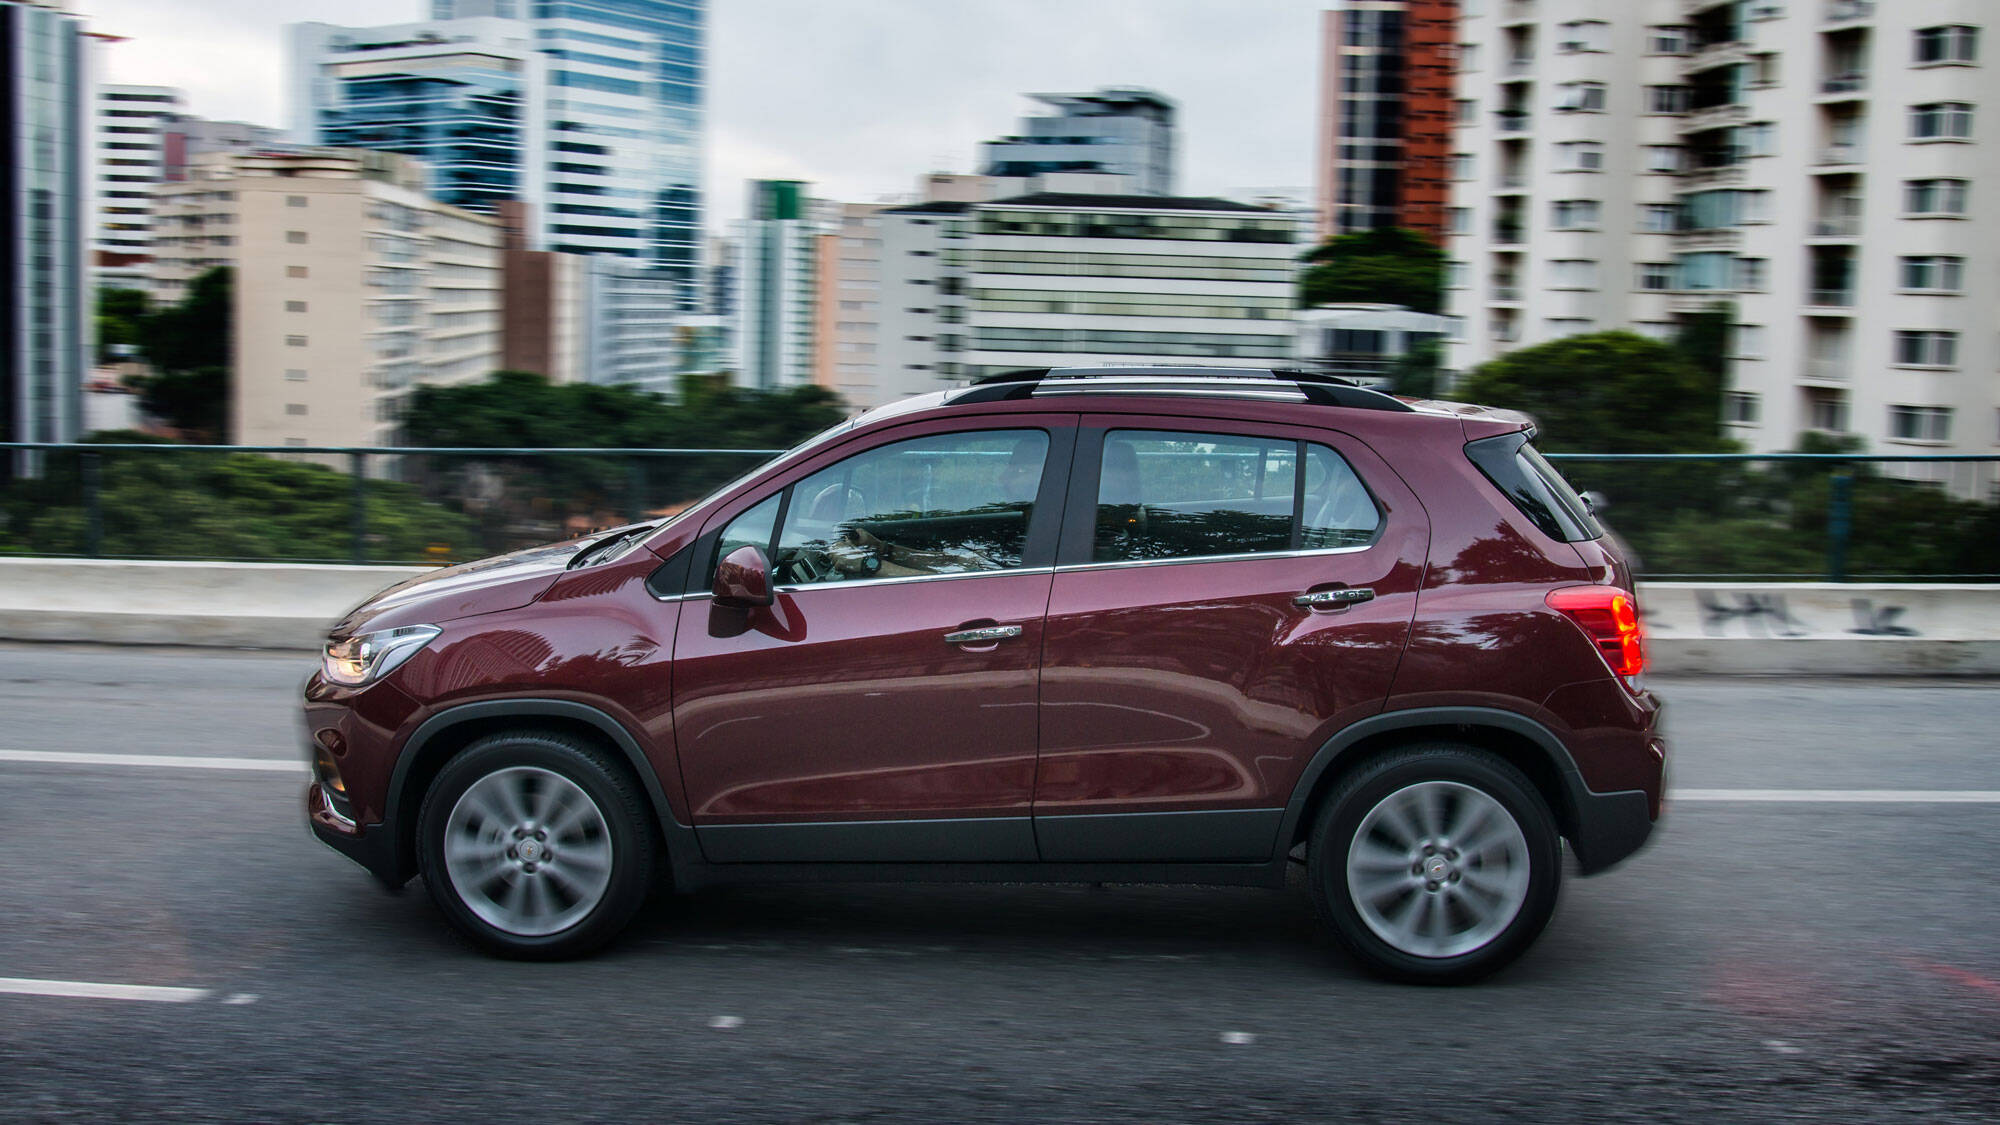 Chevrolet Tracker 2017. Foto: Divulgação/General Motors